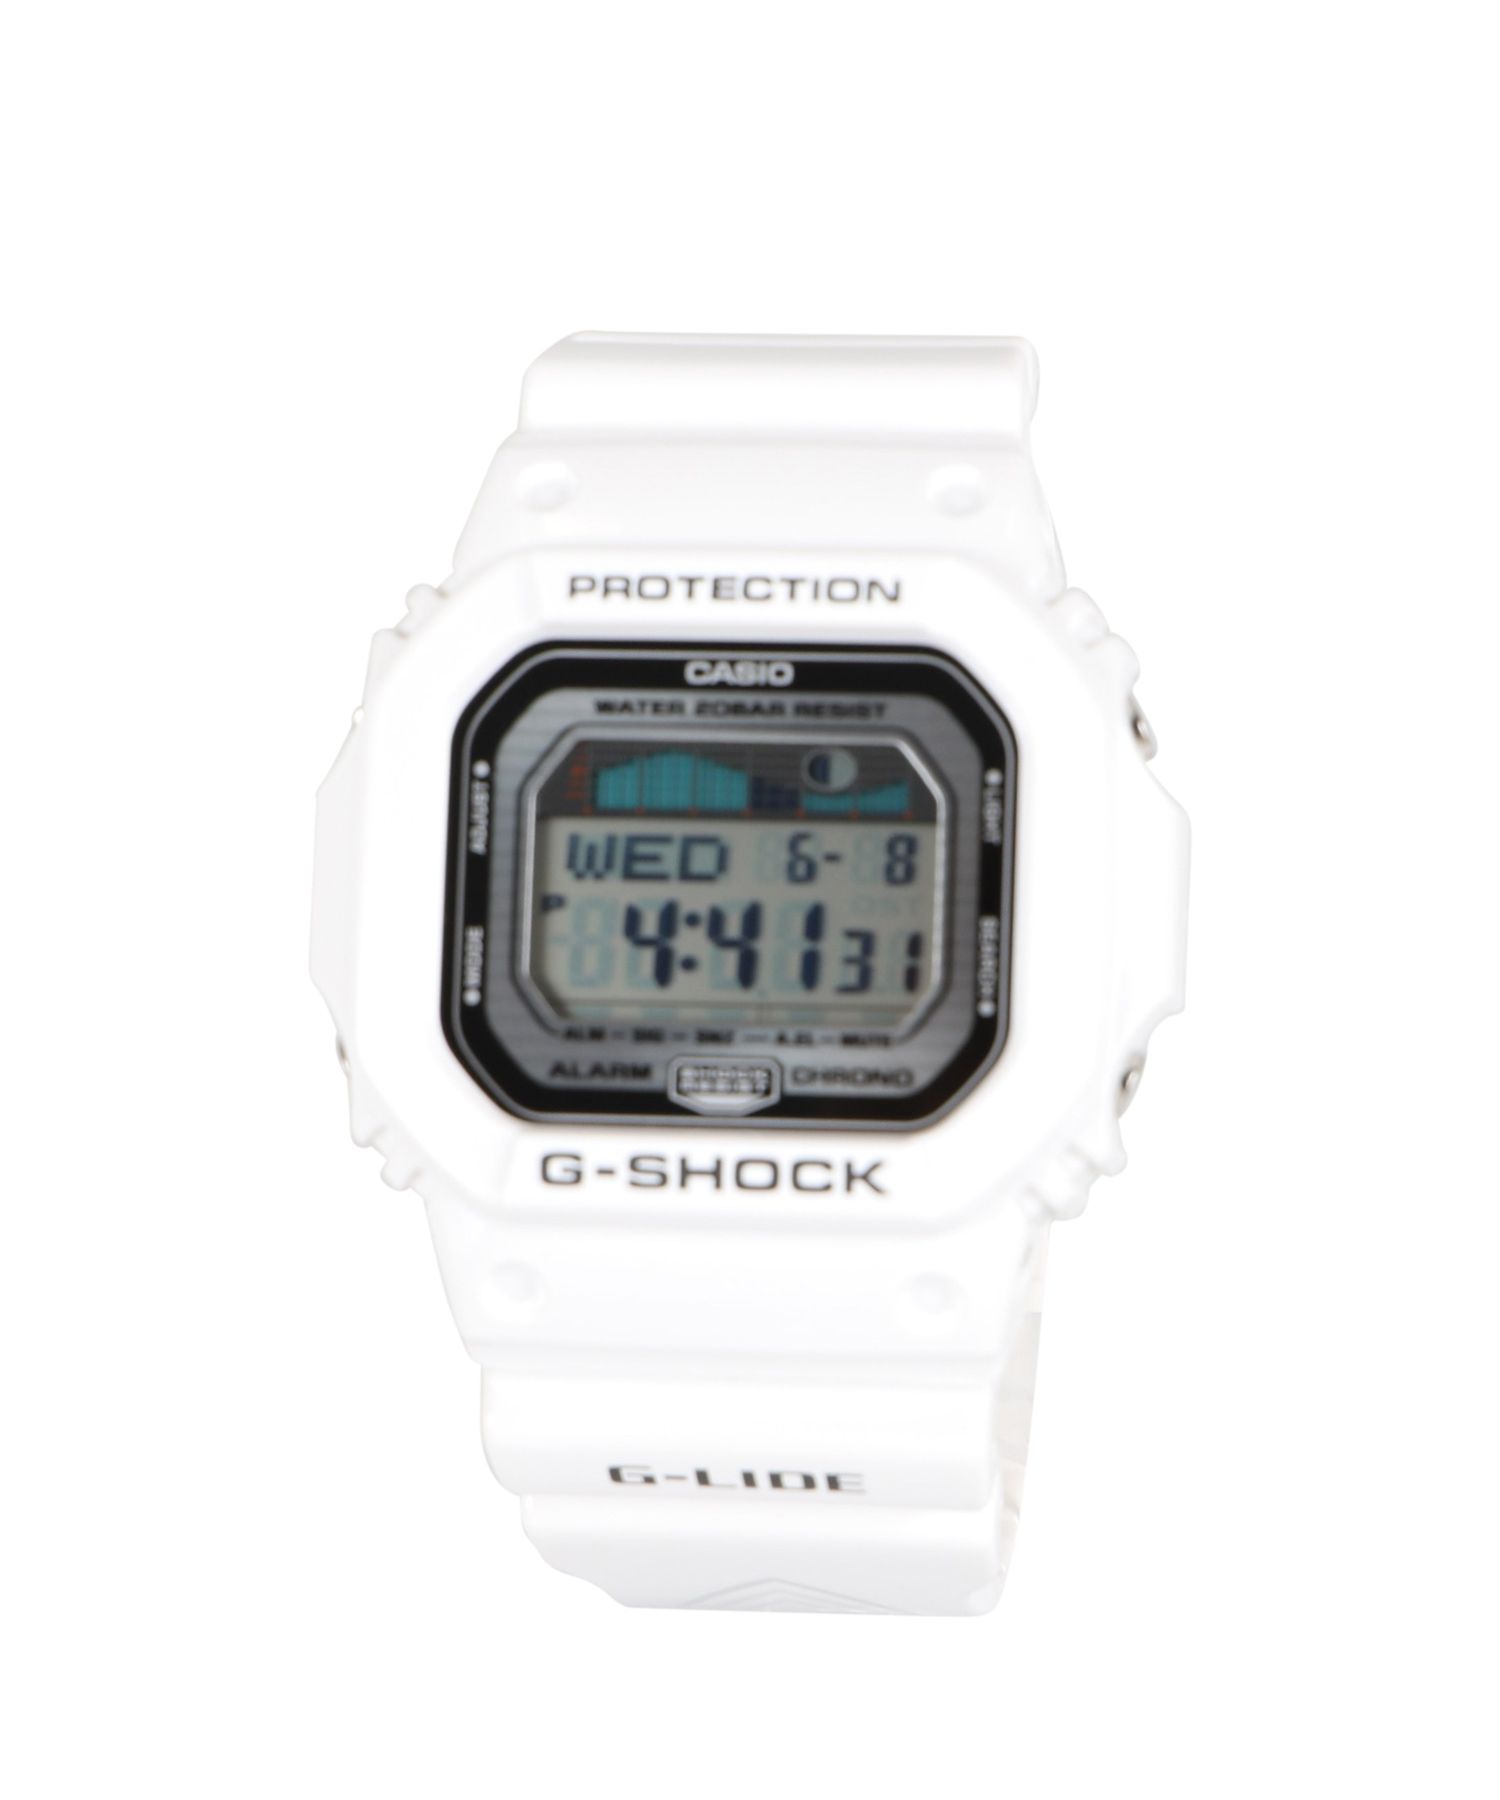 G-SHOCK 腕時計 白 GLX-5600-7JF ホワイト